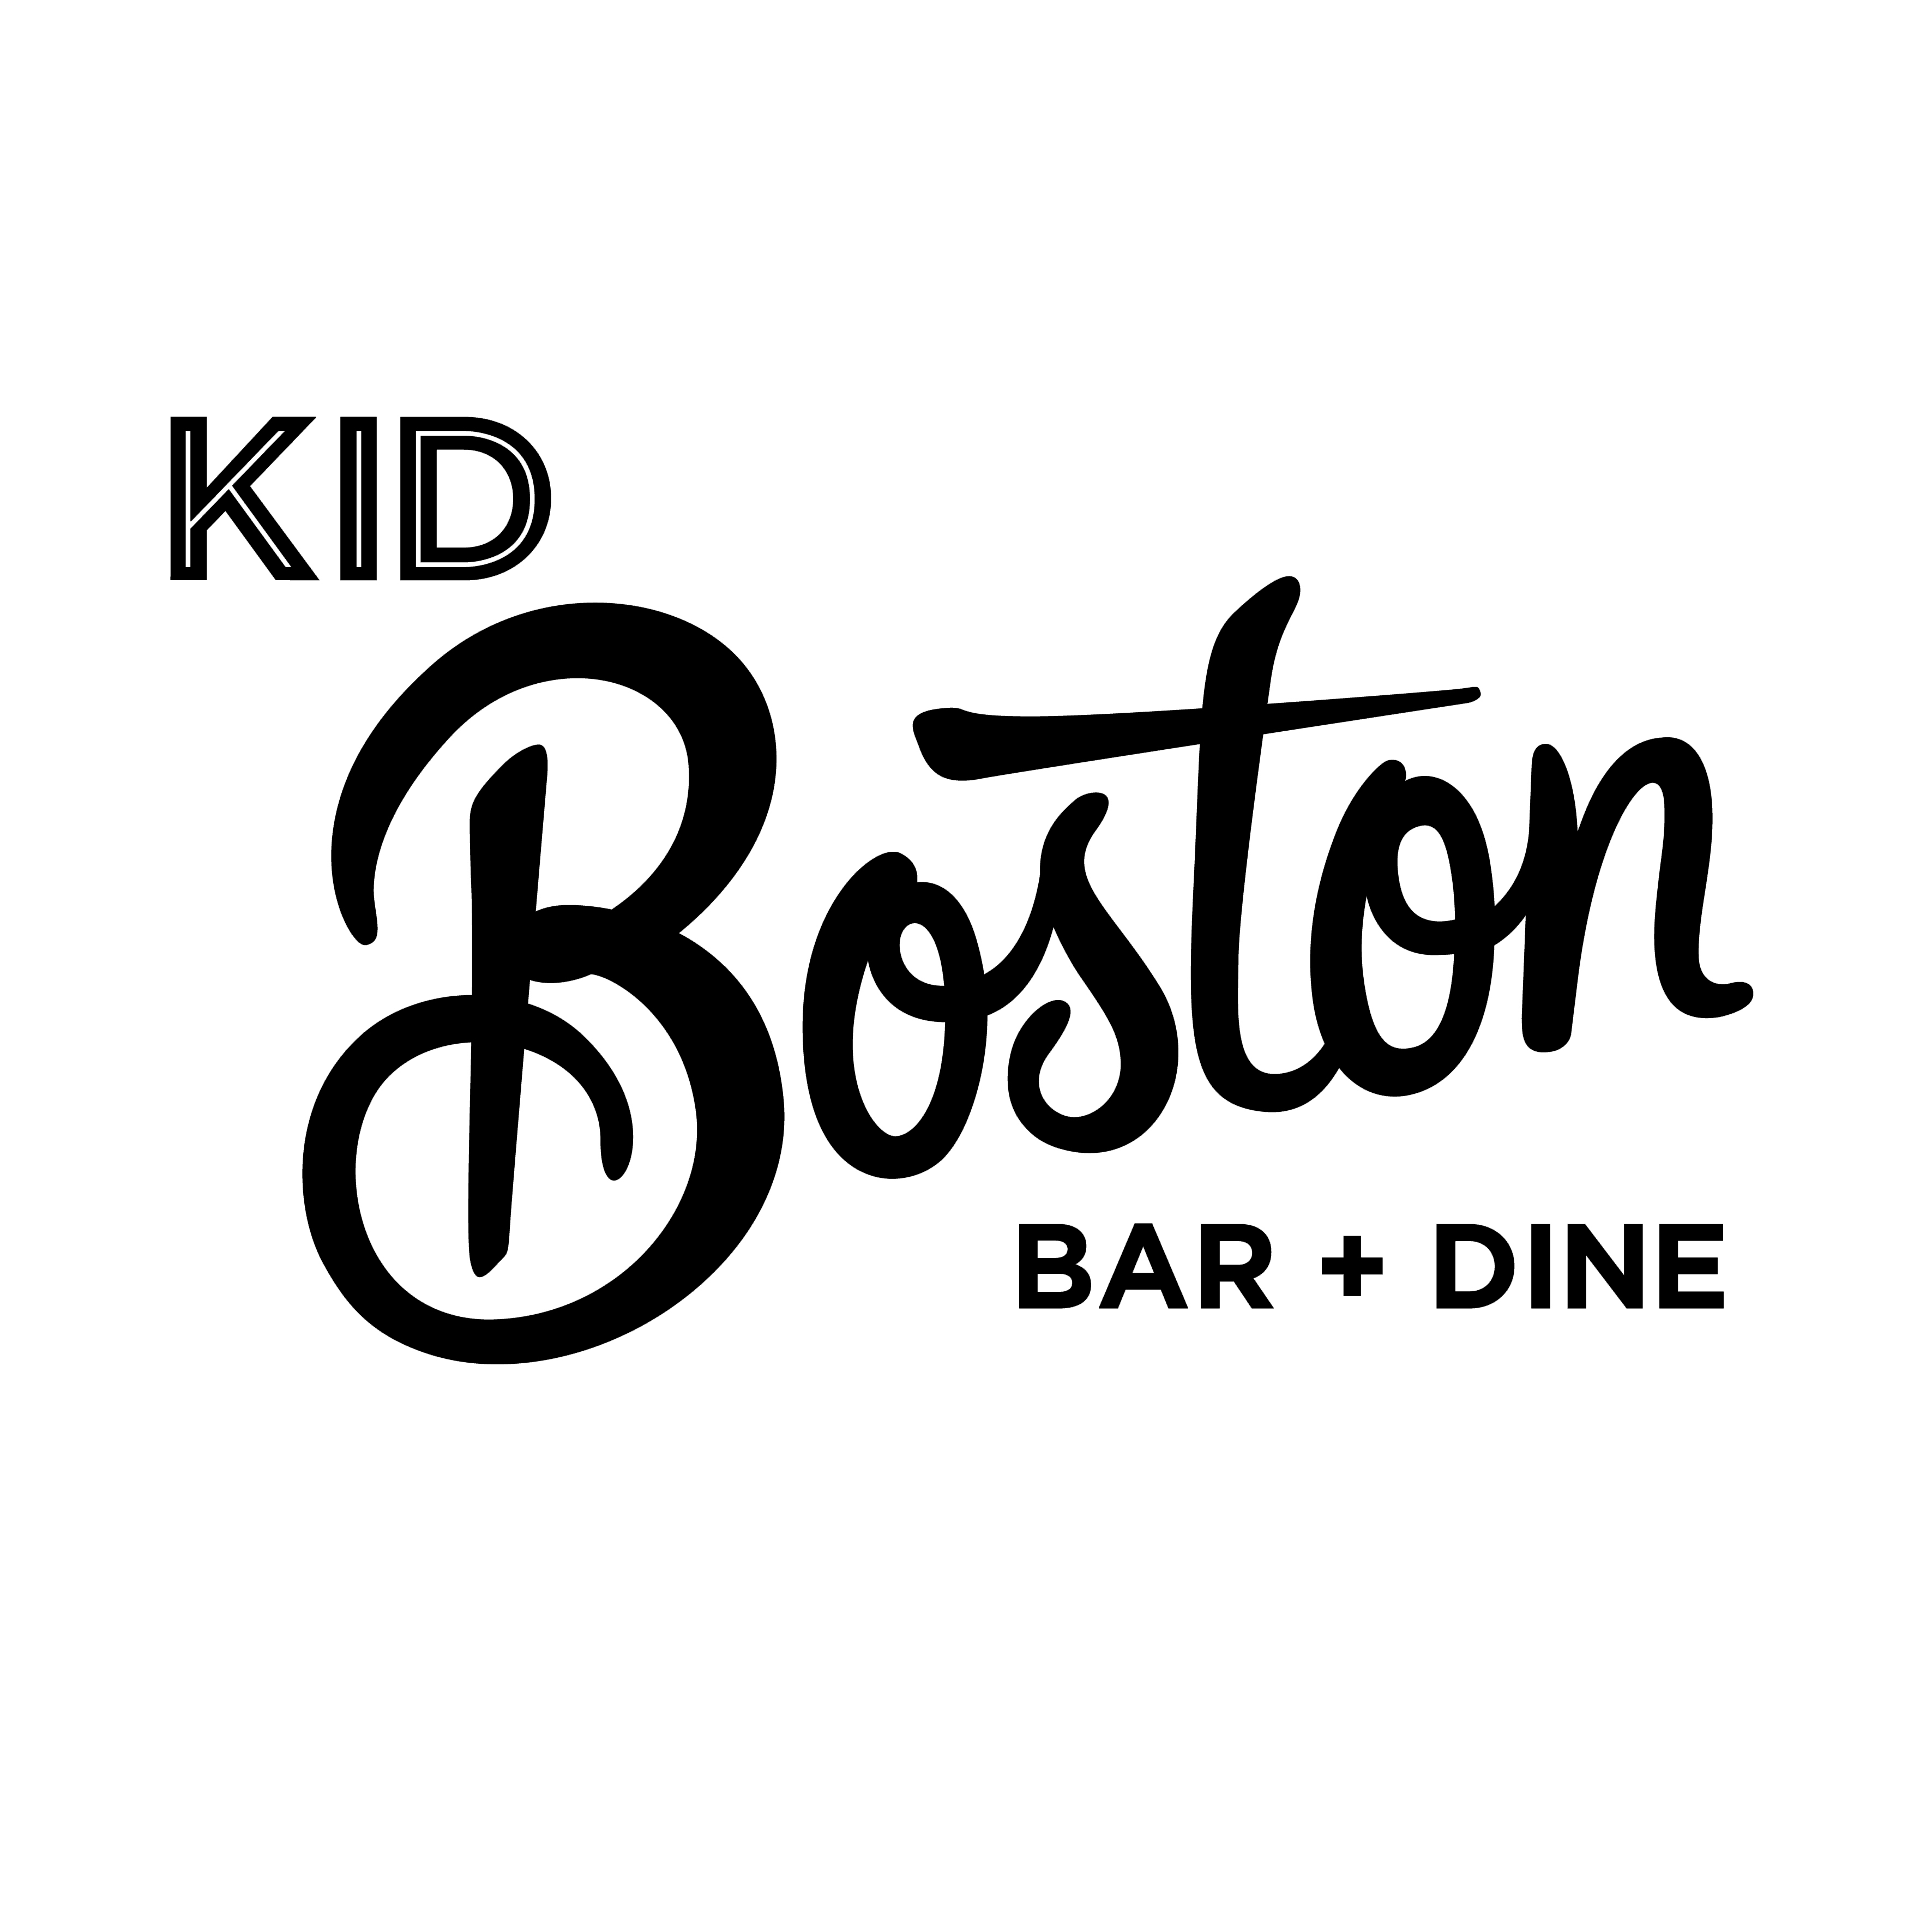 Kid Boston